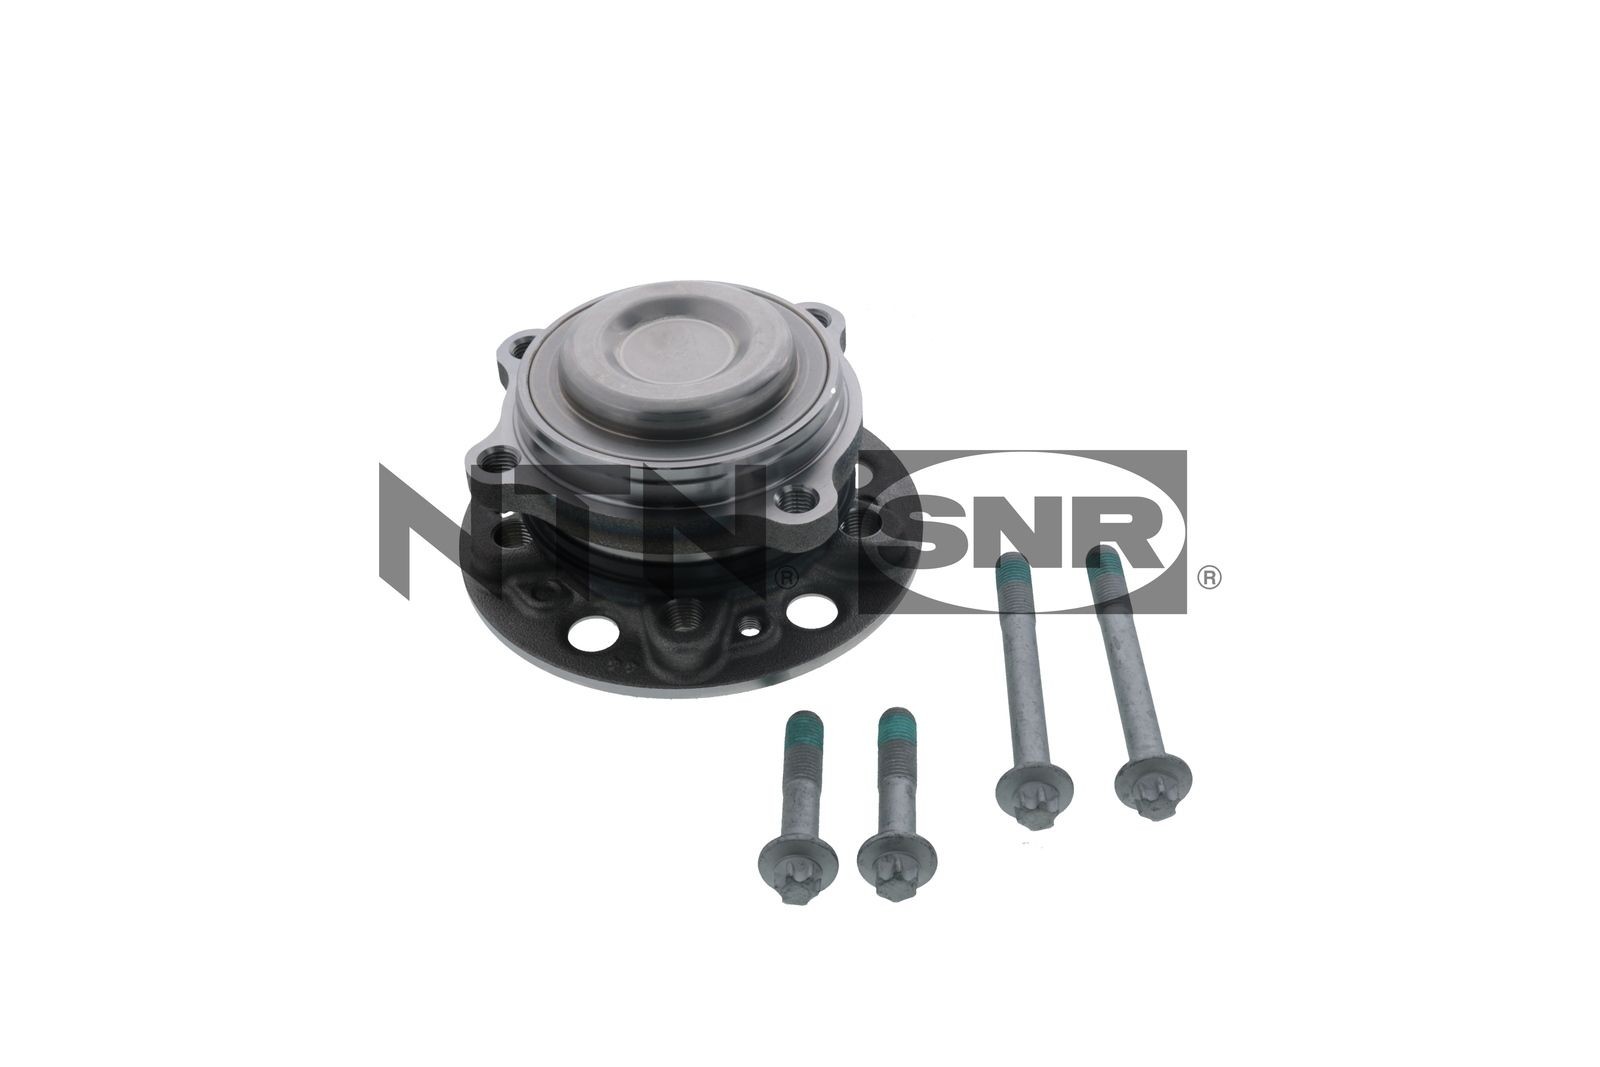 Mercedes C205 Bearings parts - Wheel bearing kit SNR R151.64